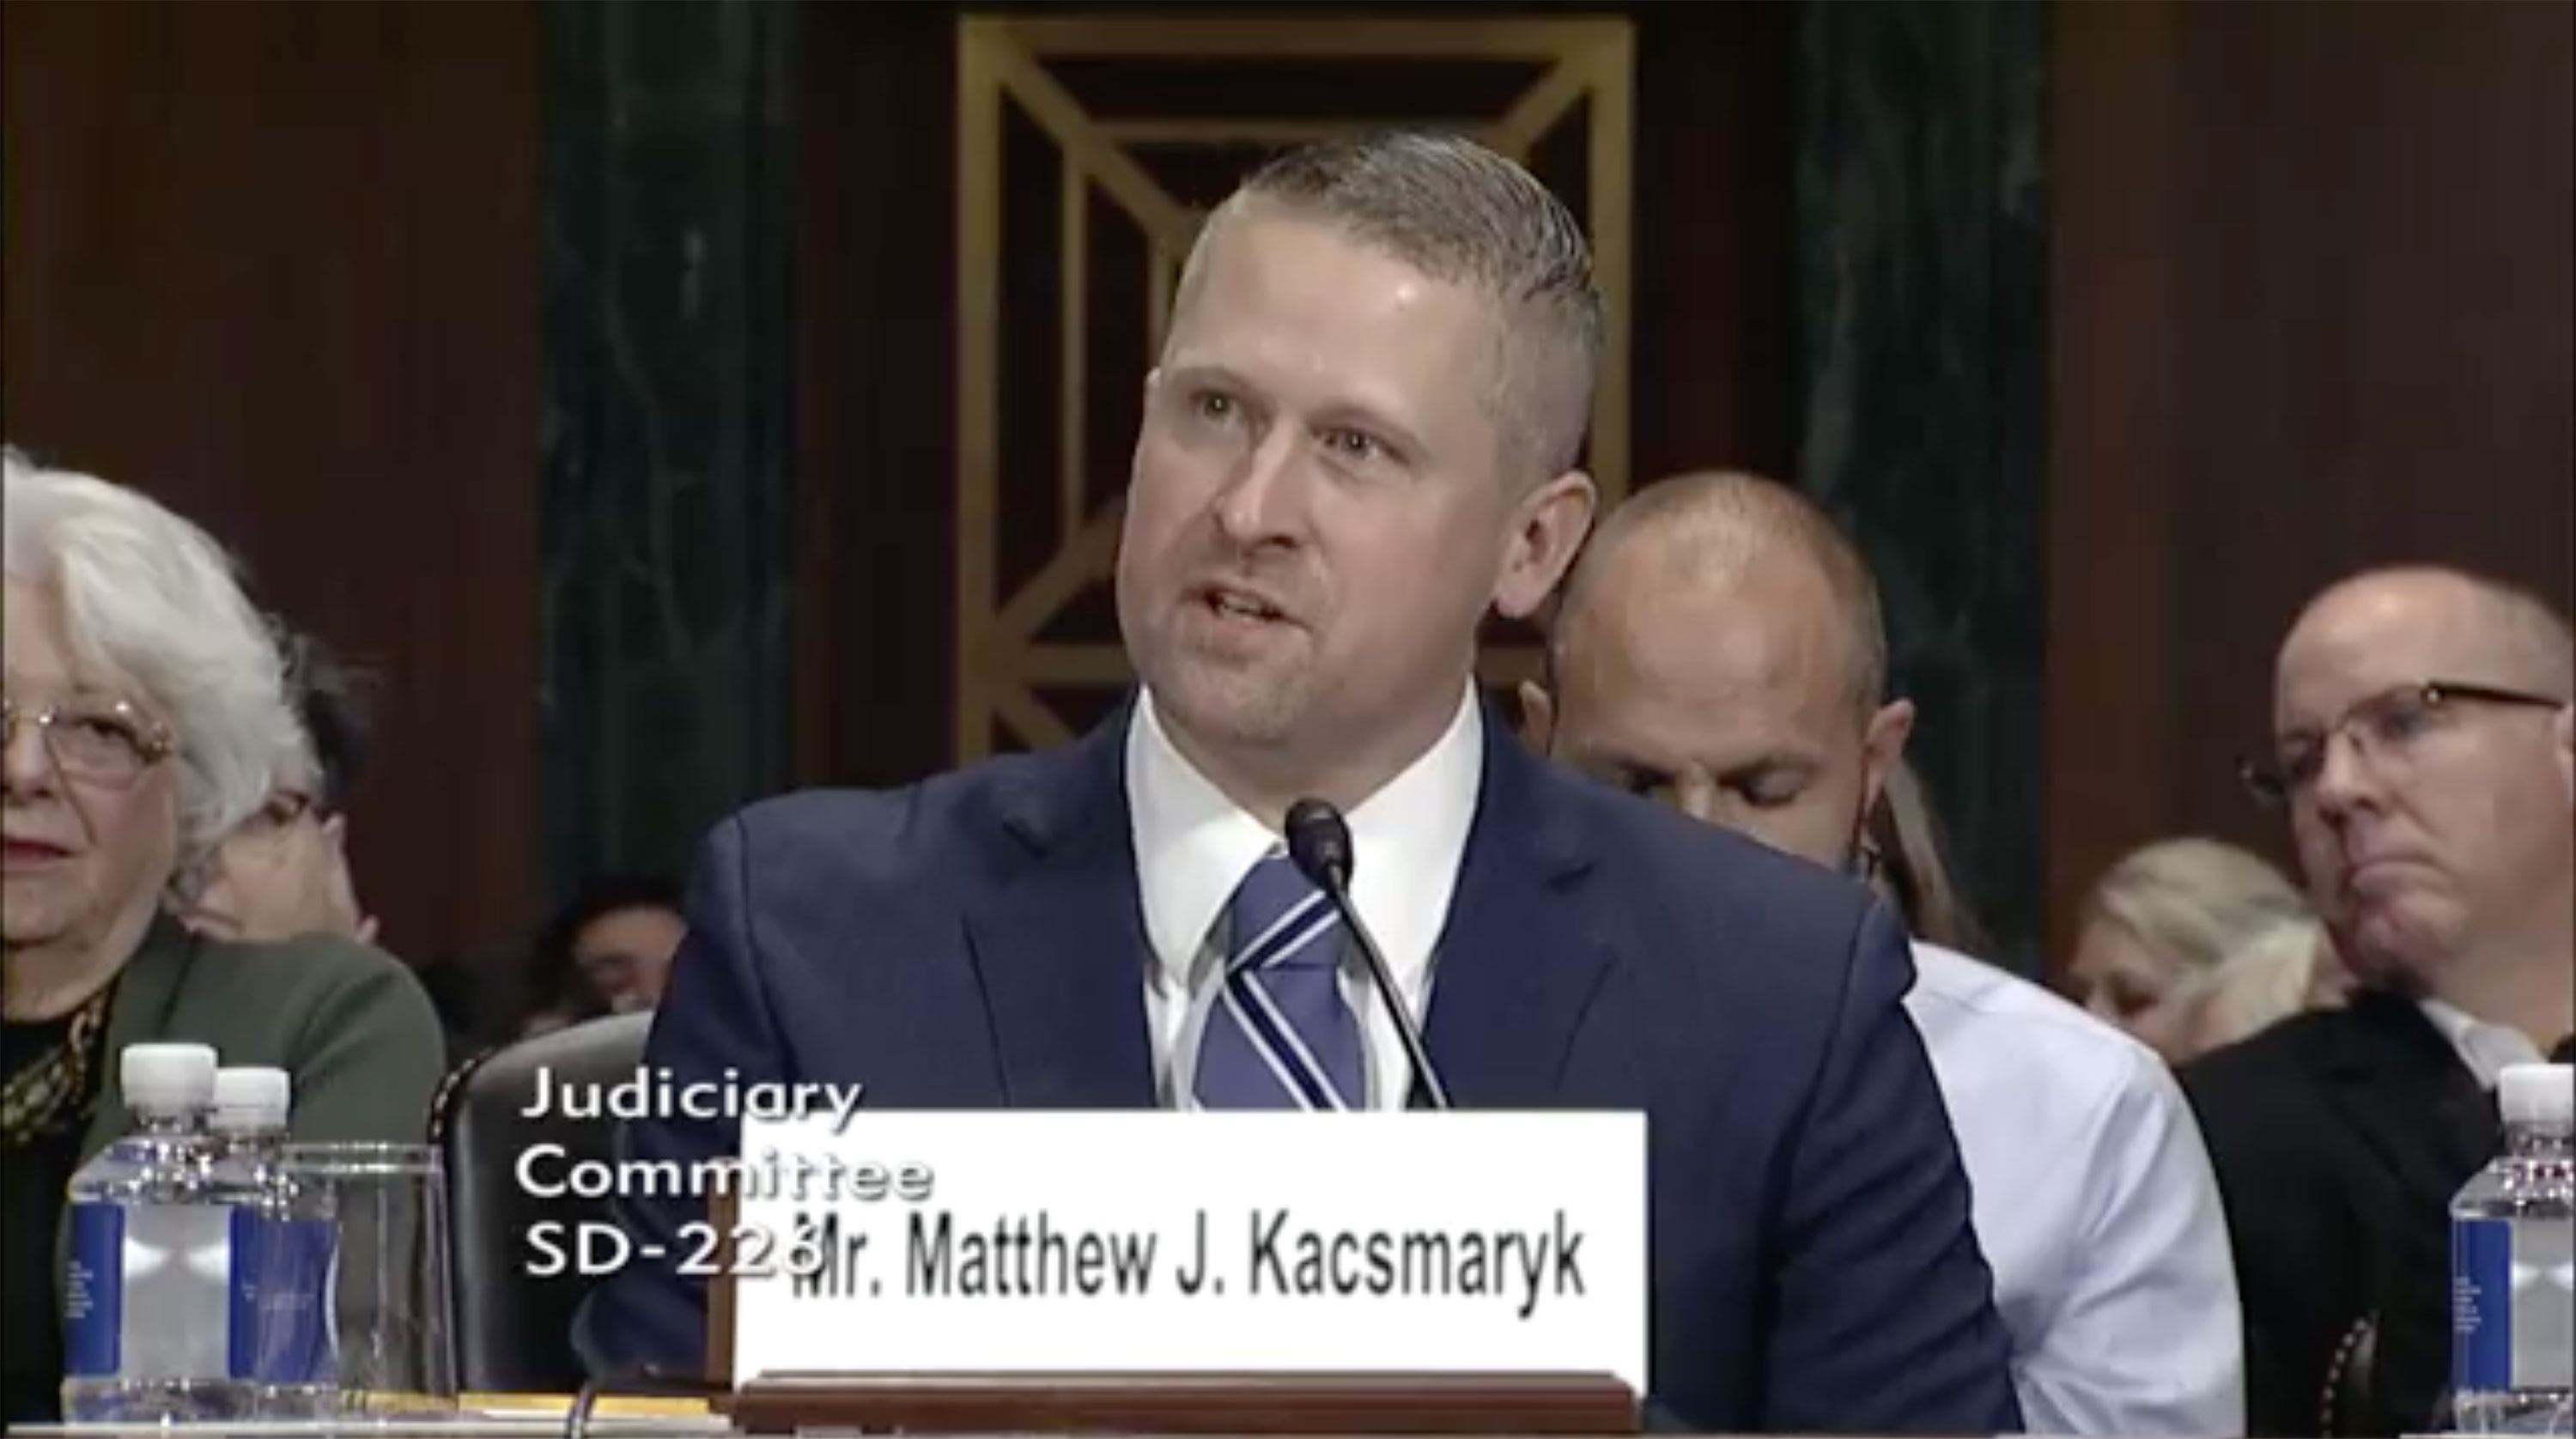 US district judge Matthew Kacsmaryk speaks at his nomination hearing on Wednesday, December 13th, 2017, in Washington, DC.